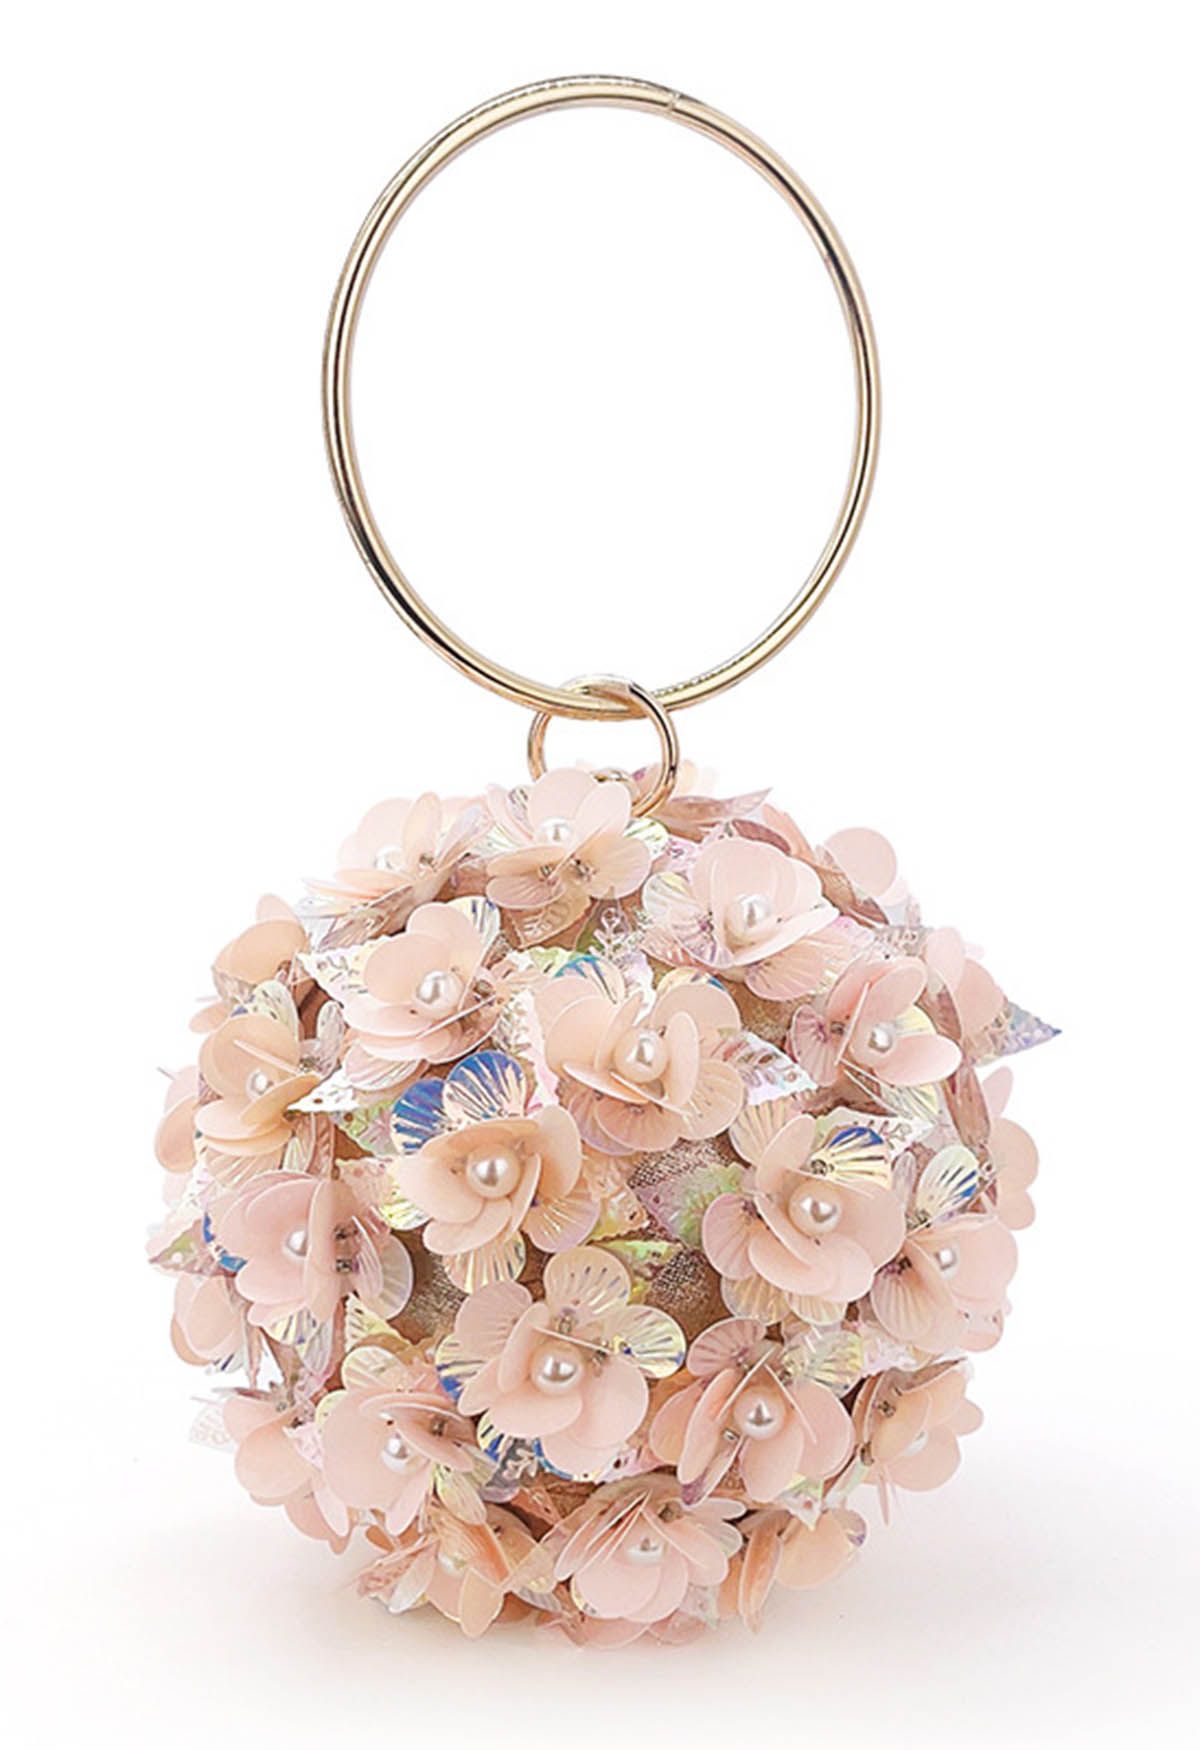 Exquisito bolso de mano con bola de flores en rosa